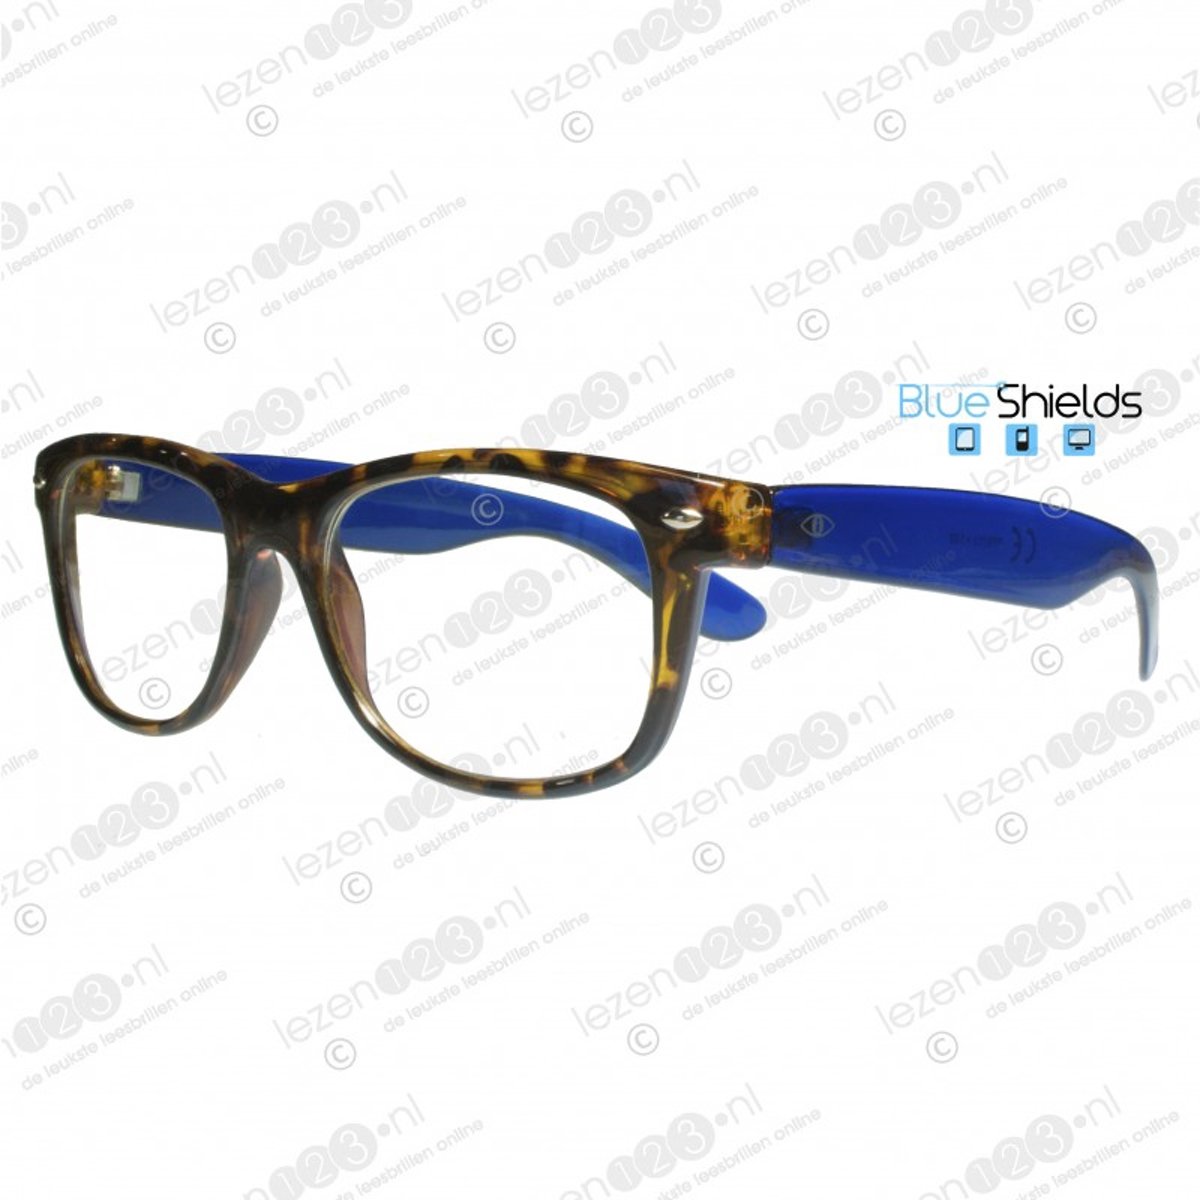 Foto van Icon Eyewear RFE013 +2.50 WayeFarer BlueShields bril - blauw licht filter lens - Tortoise montuur, blauwe poten